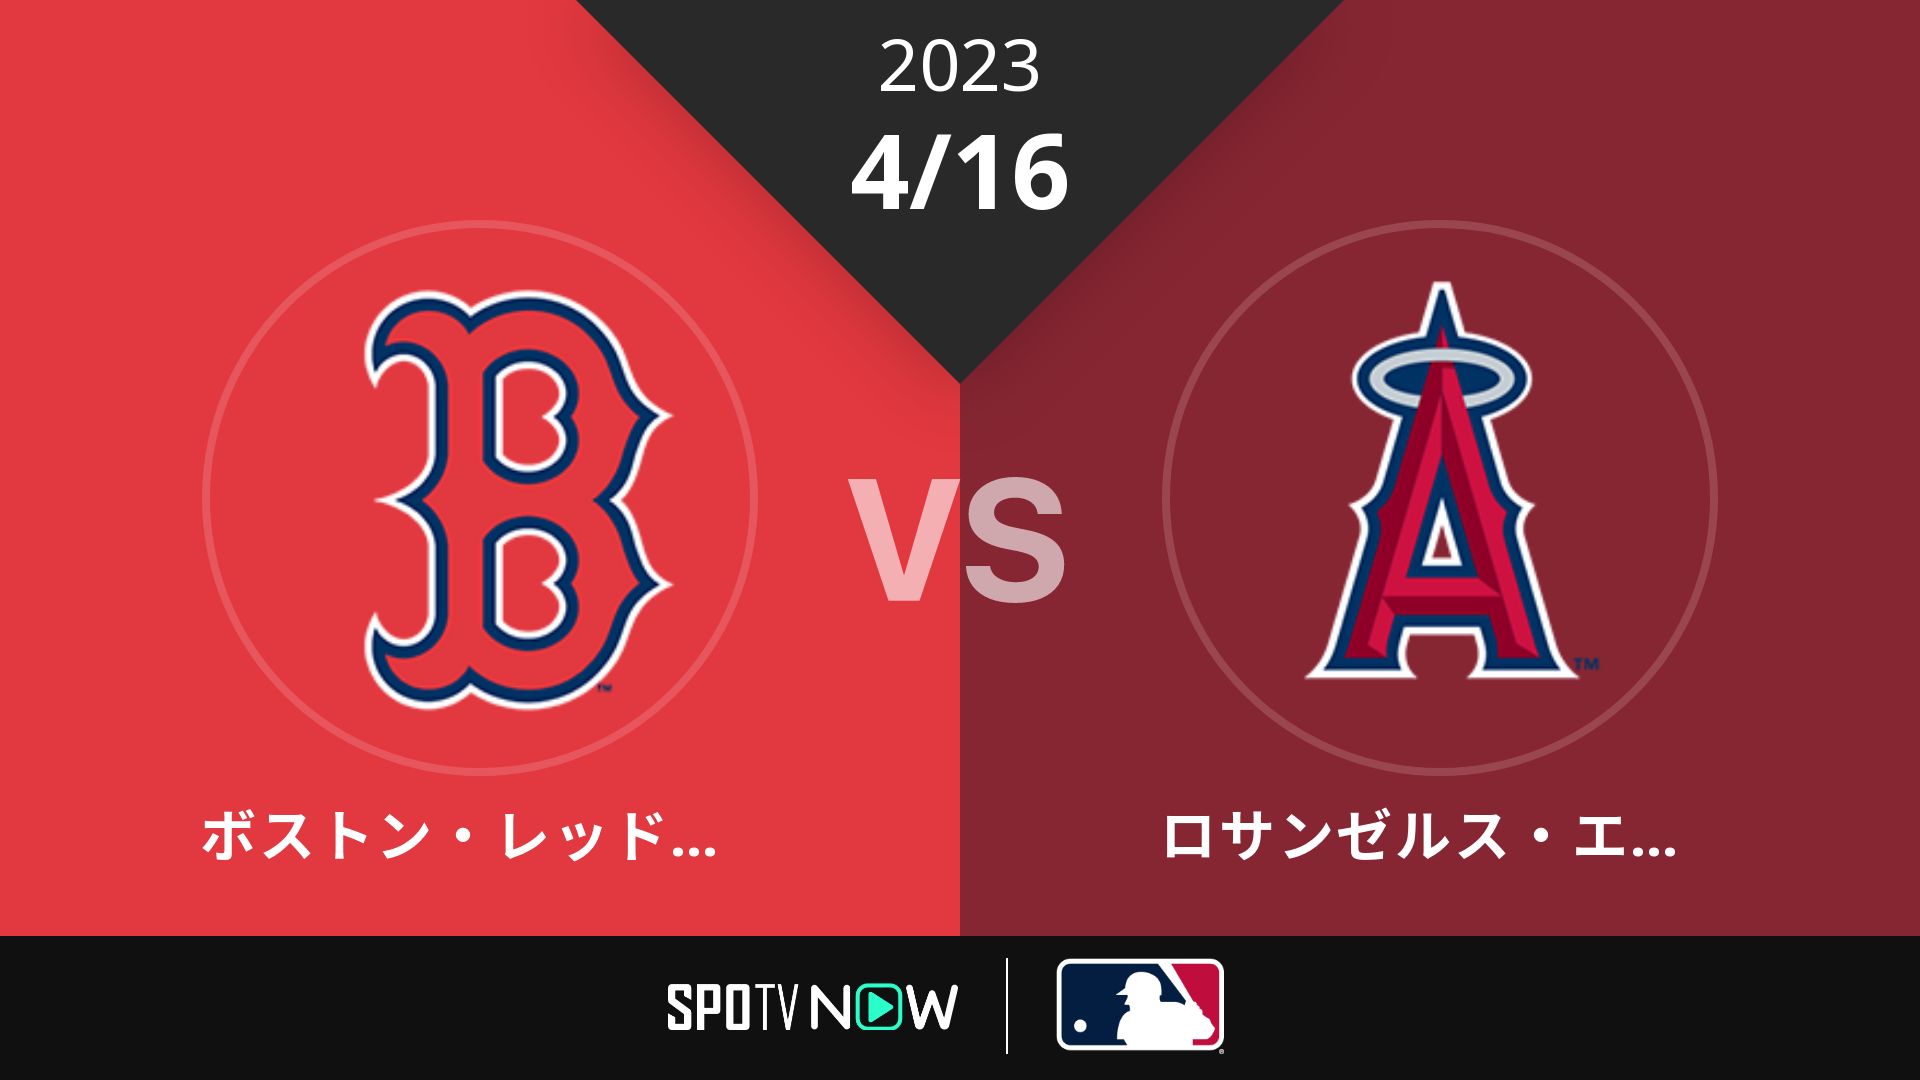 2023/4/16 Rソックス vs エンゼルス [MLB]